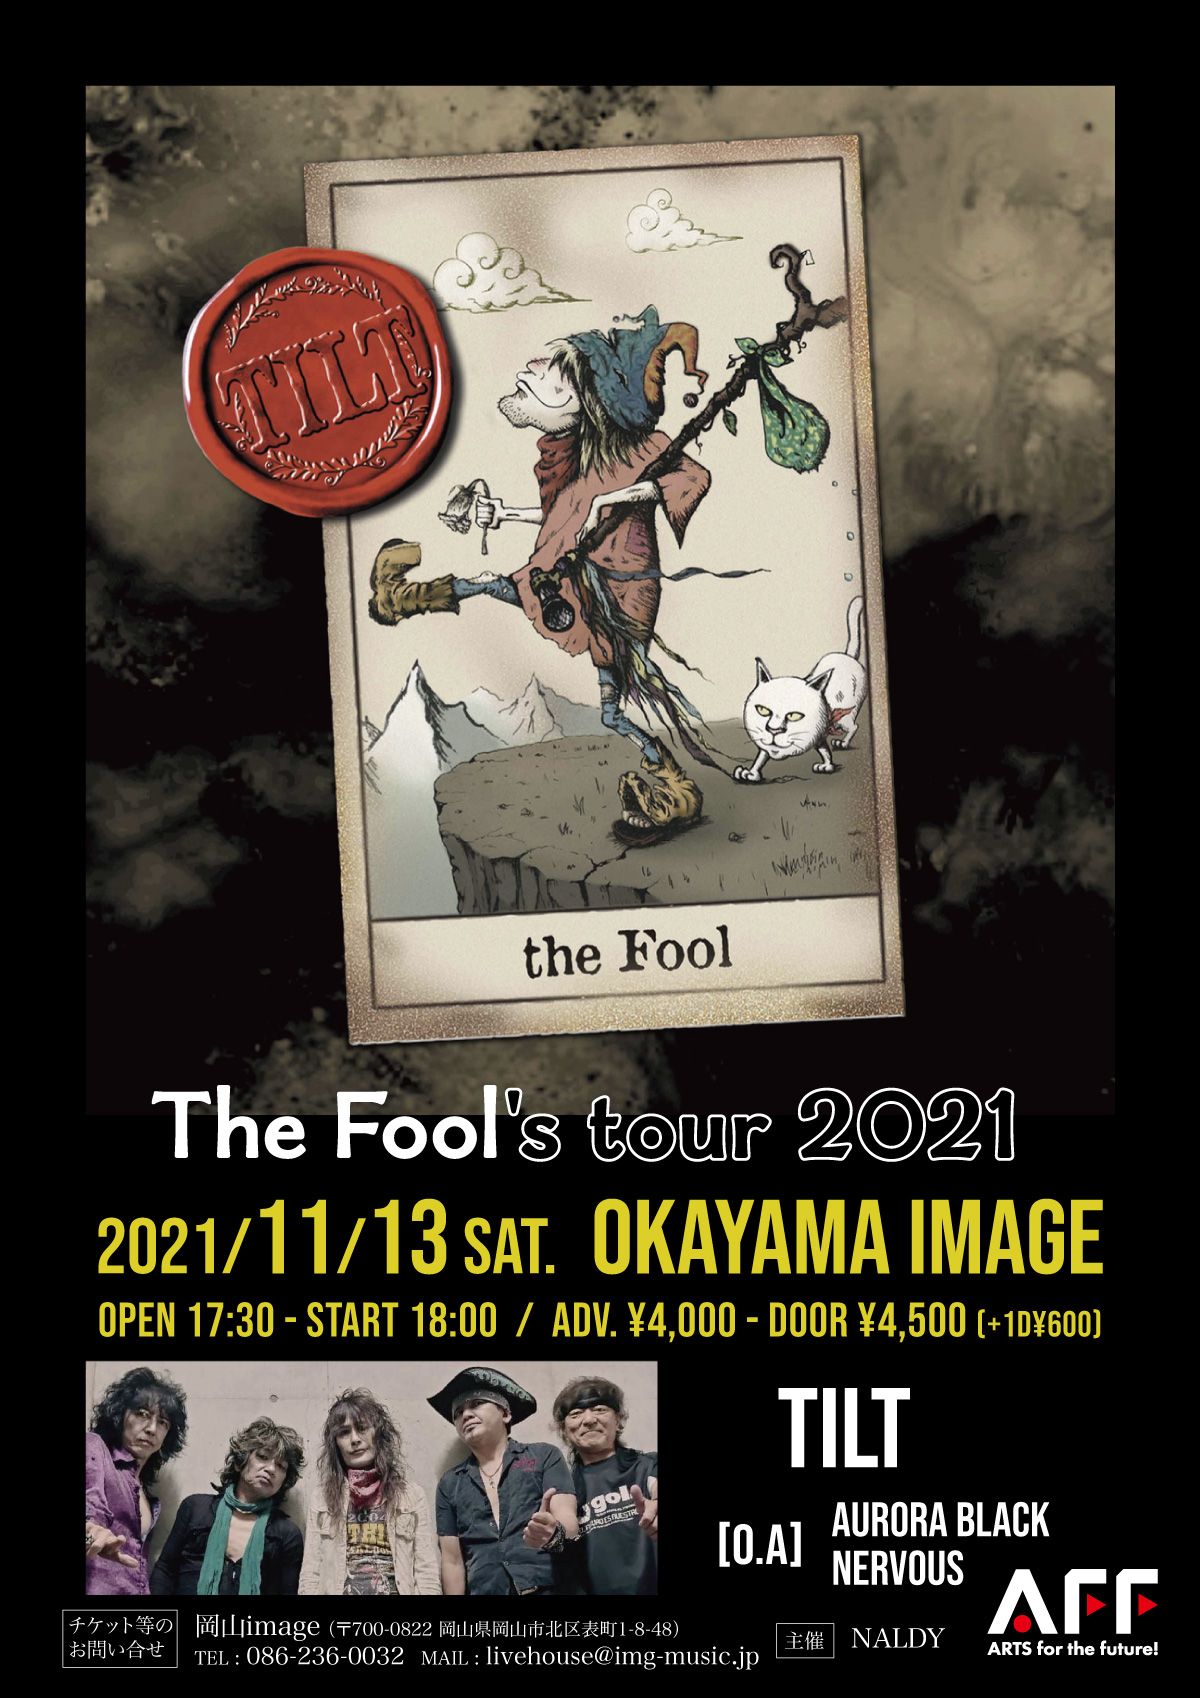 The Fool's tour 2021